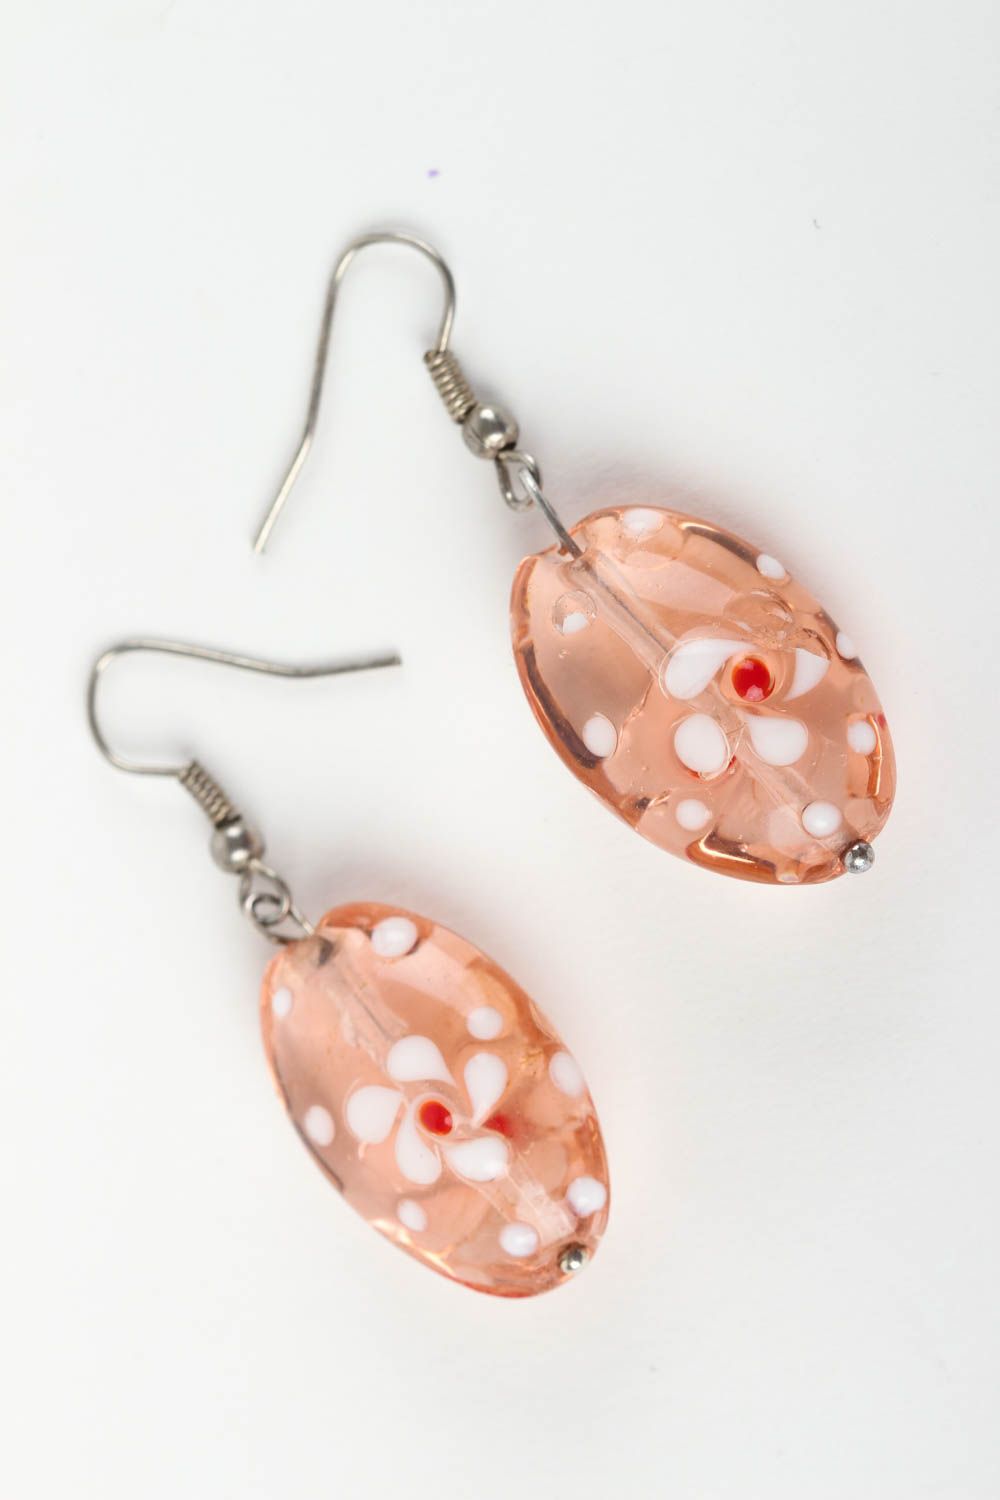 Unusual handmade glass earrings glass art artisan jewelry designs gift ideas photo 2